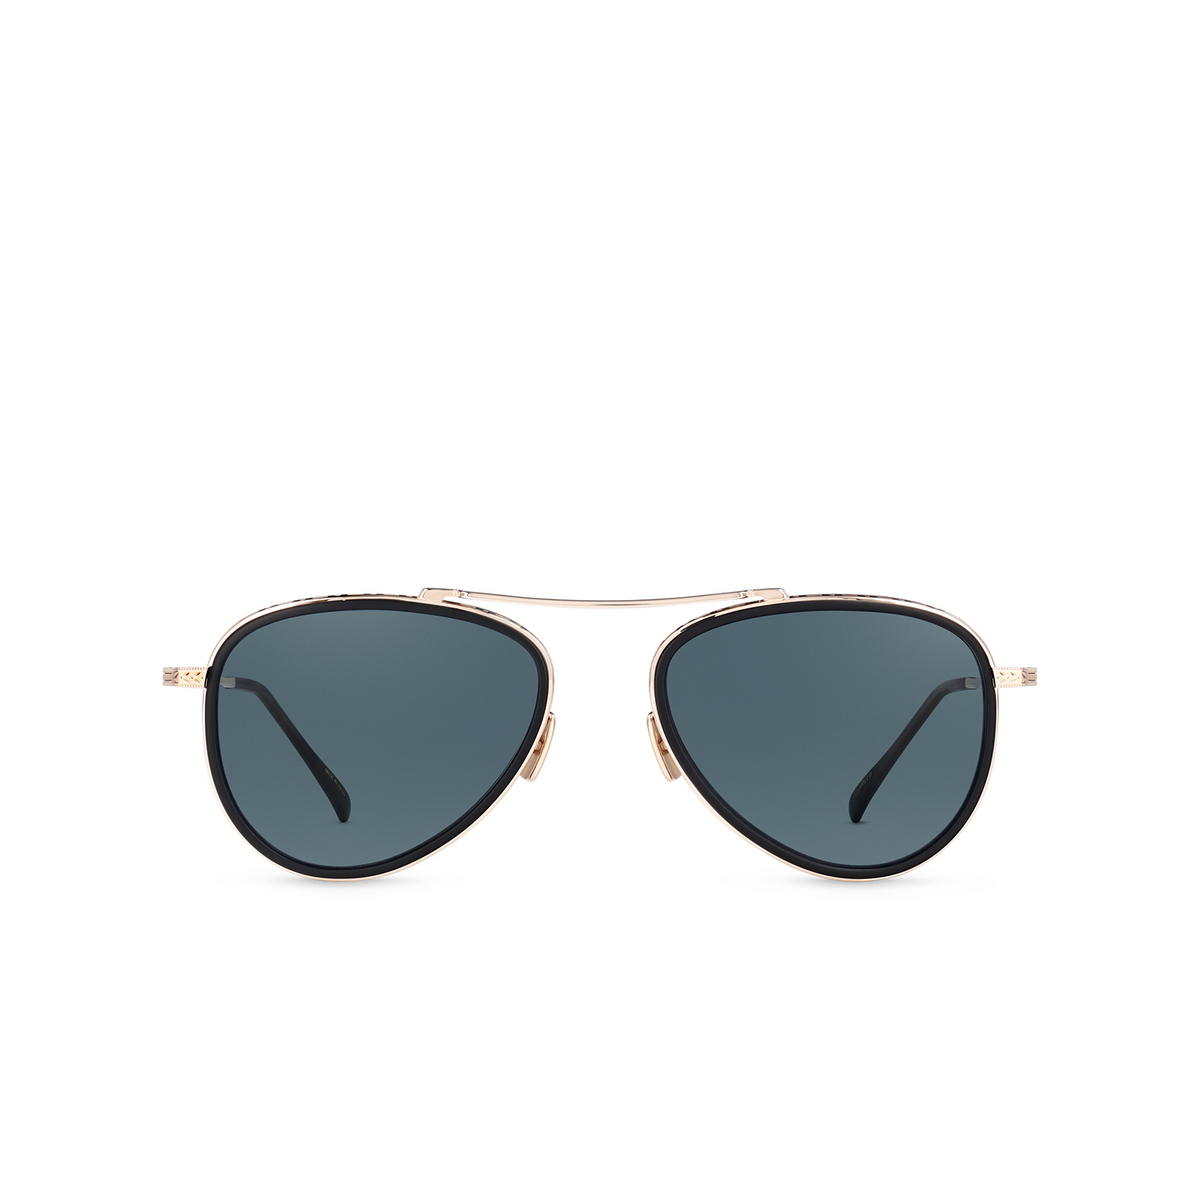 Mr. Leight ICHI S Sunglasses MBK-12KWG-MBK/OCNGLSSPLR Matte Black-12K White Gold-Matte Black - front view